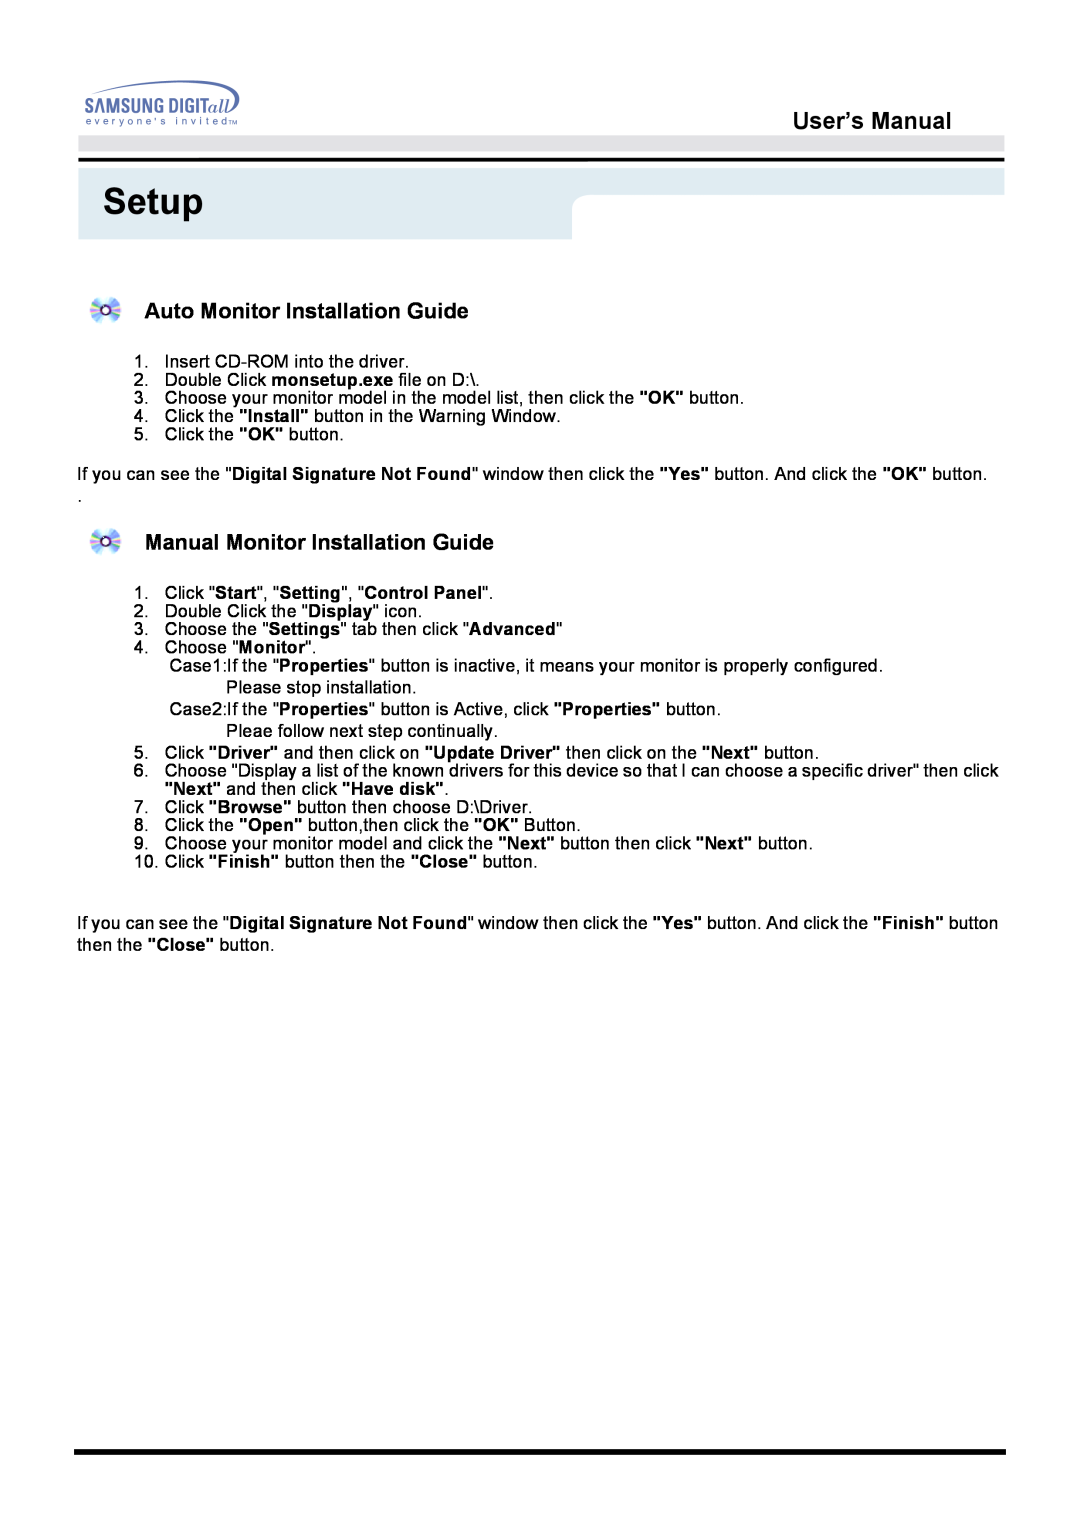 Samsung 151D user manual Setup, User’s Manual, Click Start, Setting, Control Panel 